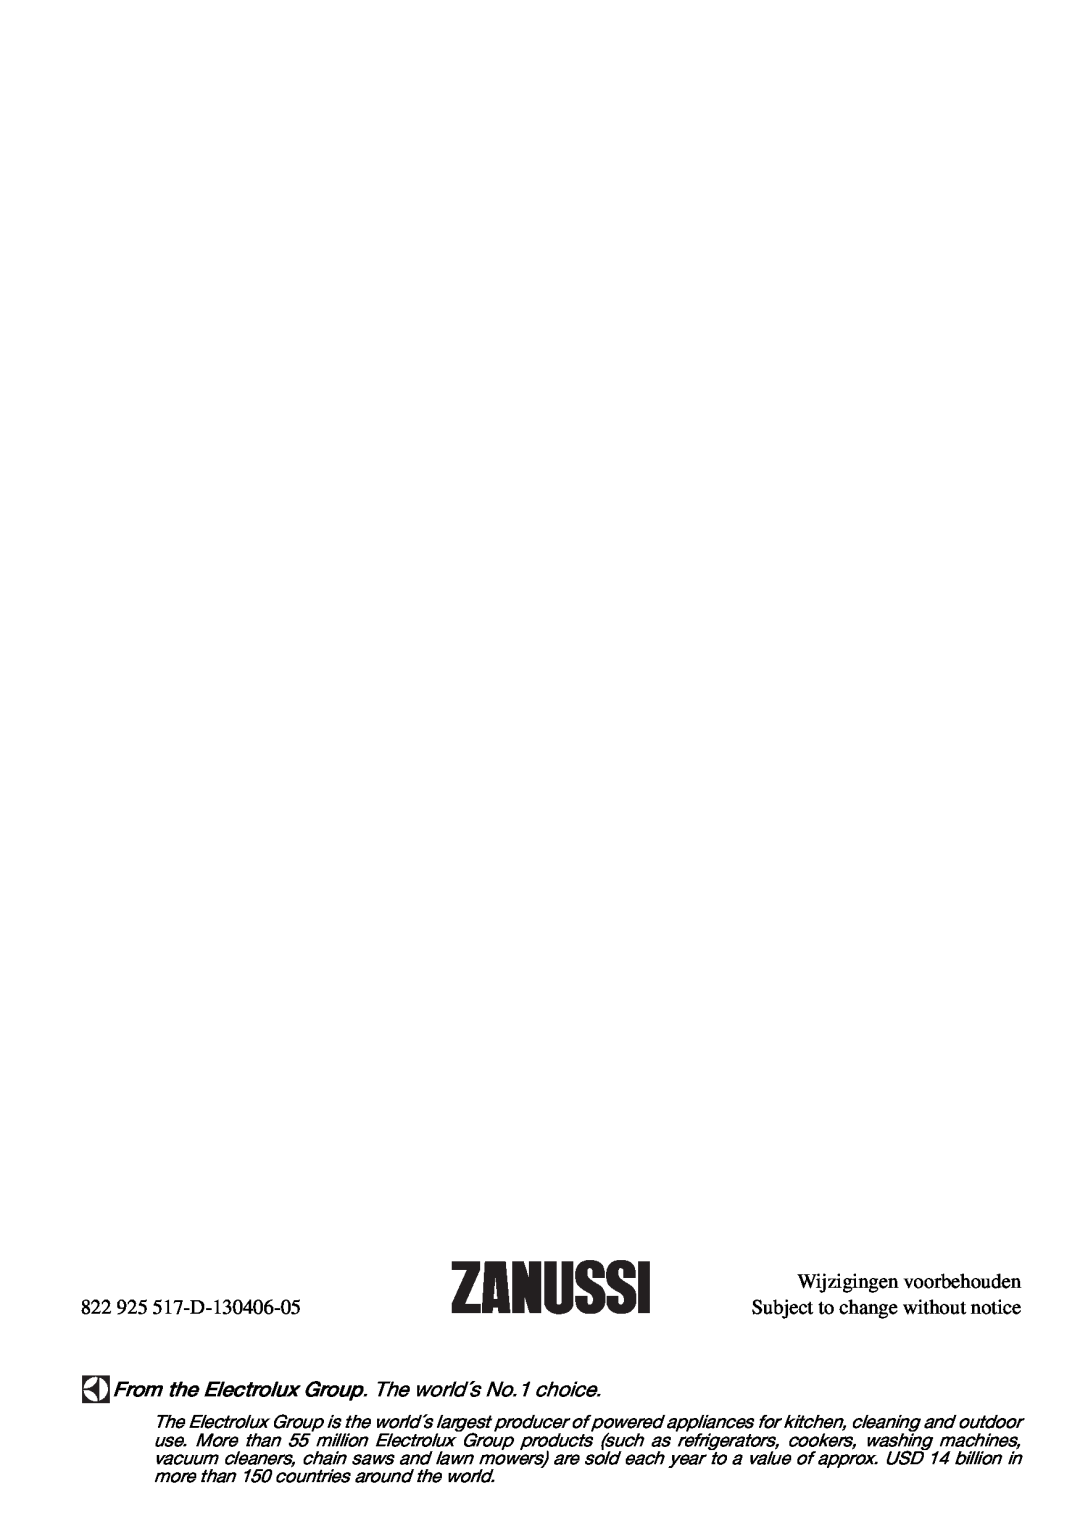 Zanussi ZKT 652 DX Wijzigingen voorbehouden, 822 925 517-D-130406-05, From the Electrolux Group. The world´s No.1 choice 